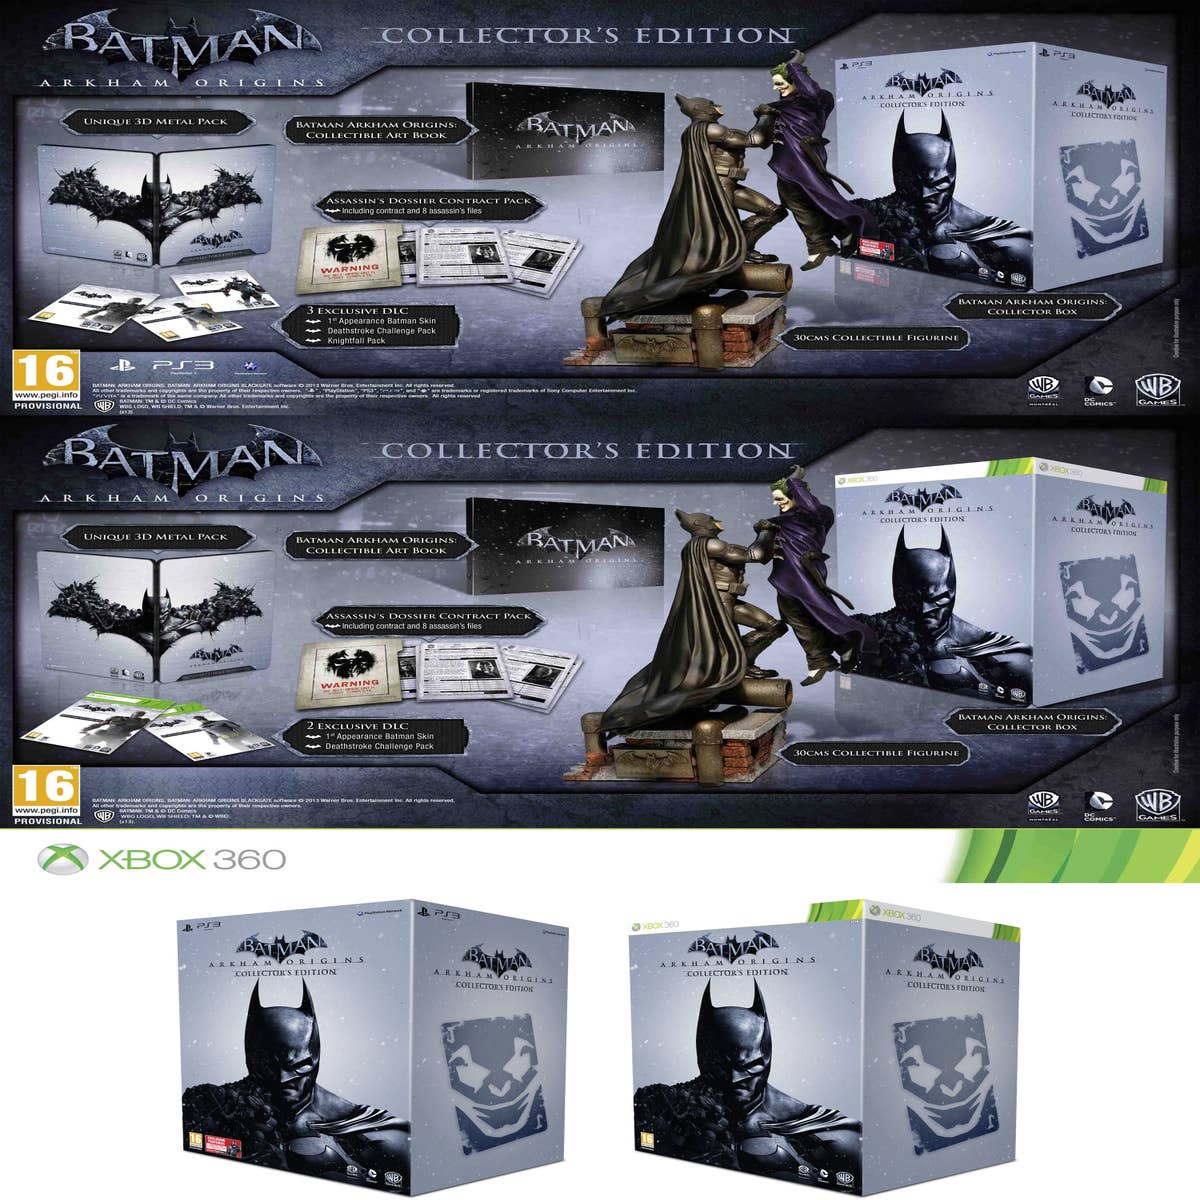 Batman: Arkham Origins Collector's Edition unveiled - GameSpot